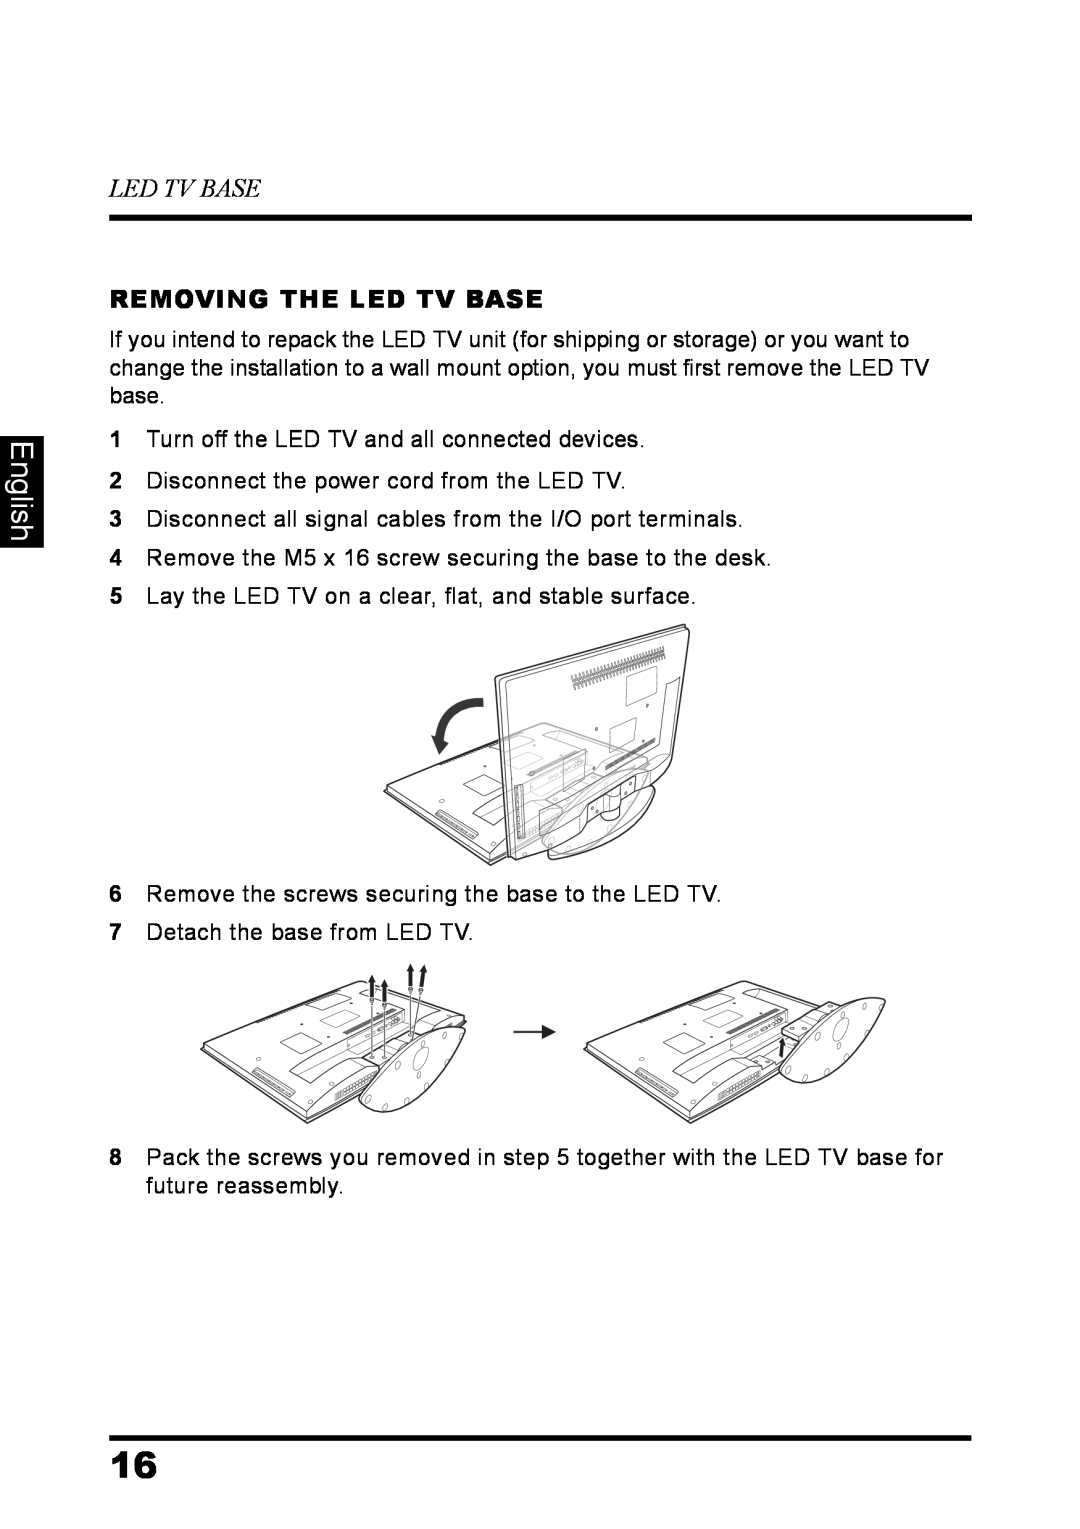 Westinghouse LD-3237 user manual English, Removing The Led Tv Base 